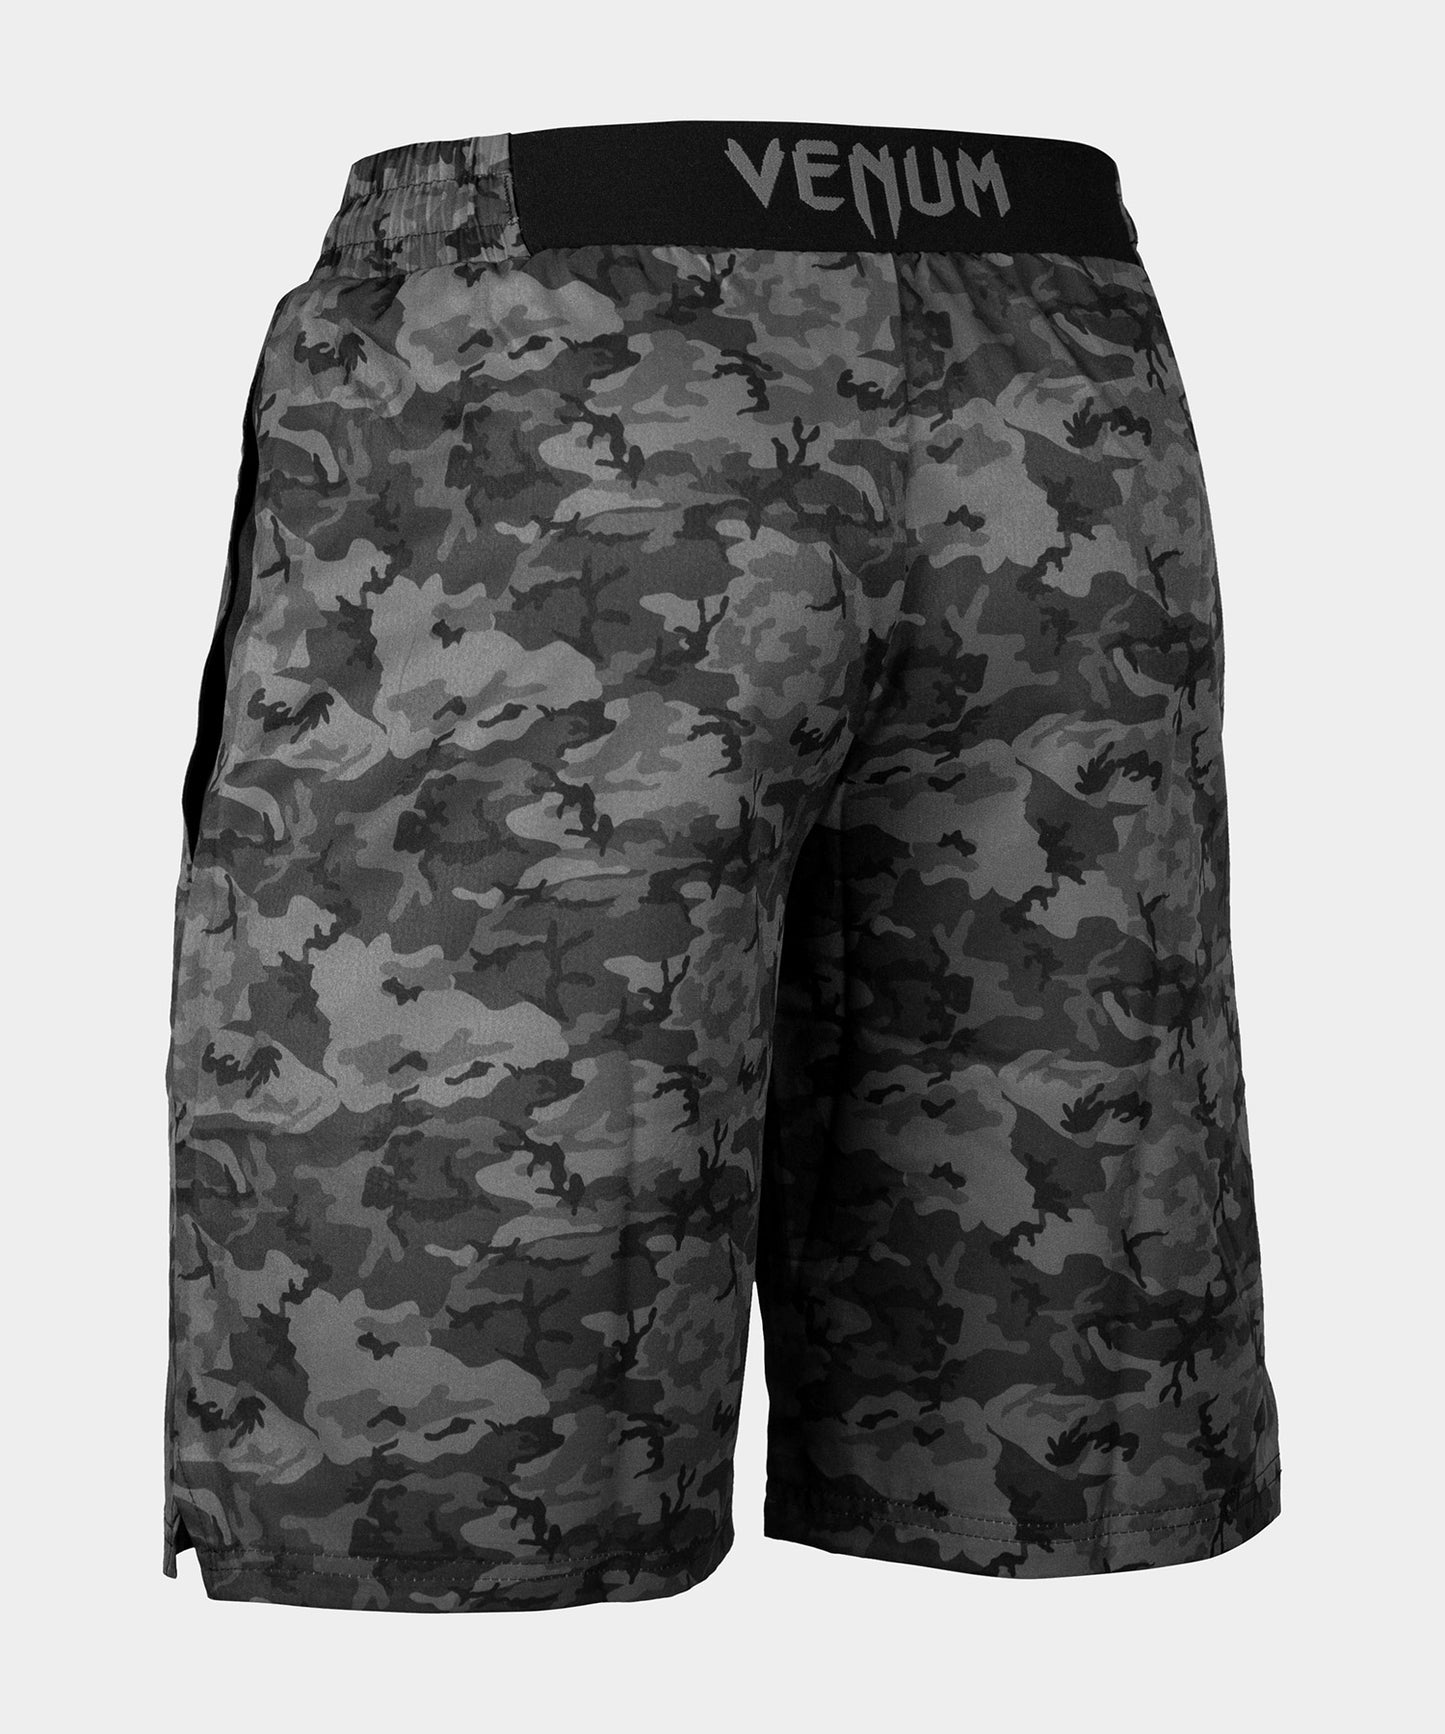 Venum Classic Training Shorts - Urban Camouflage